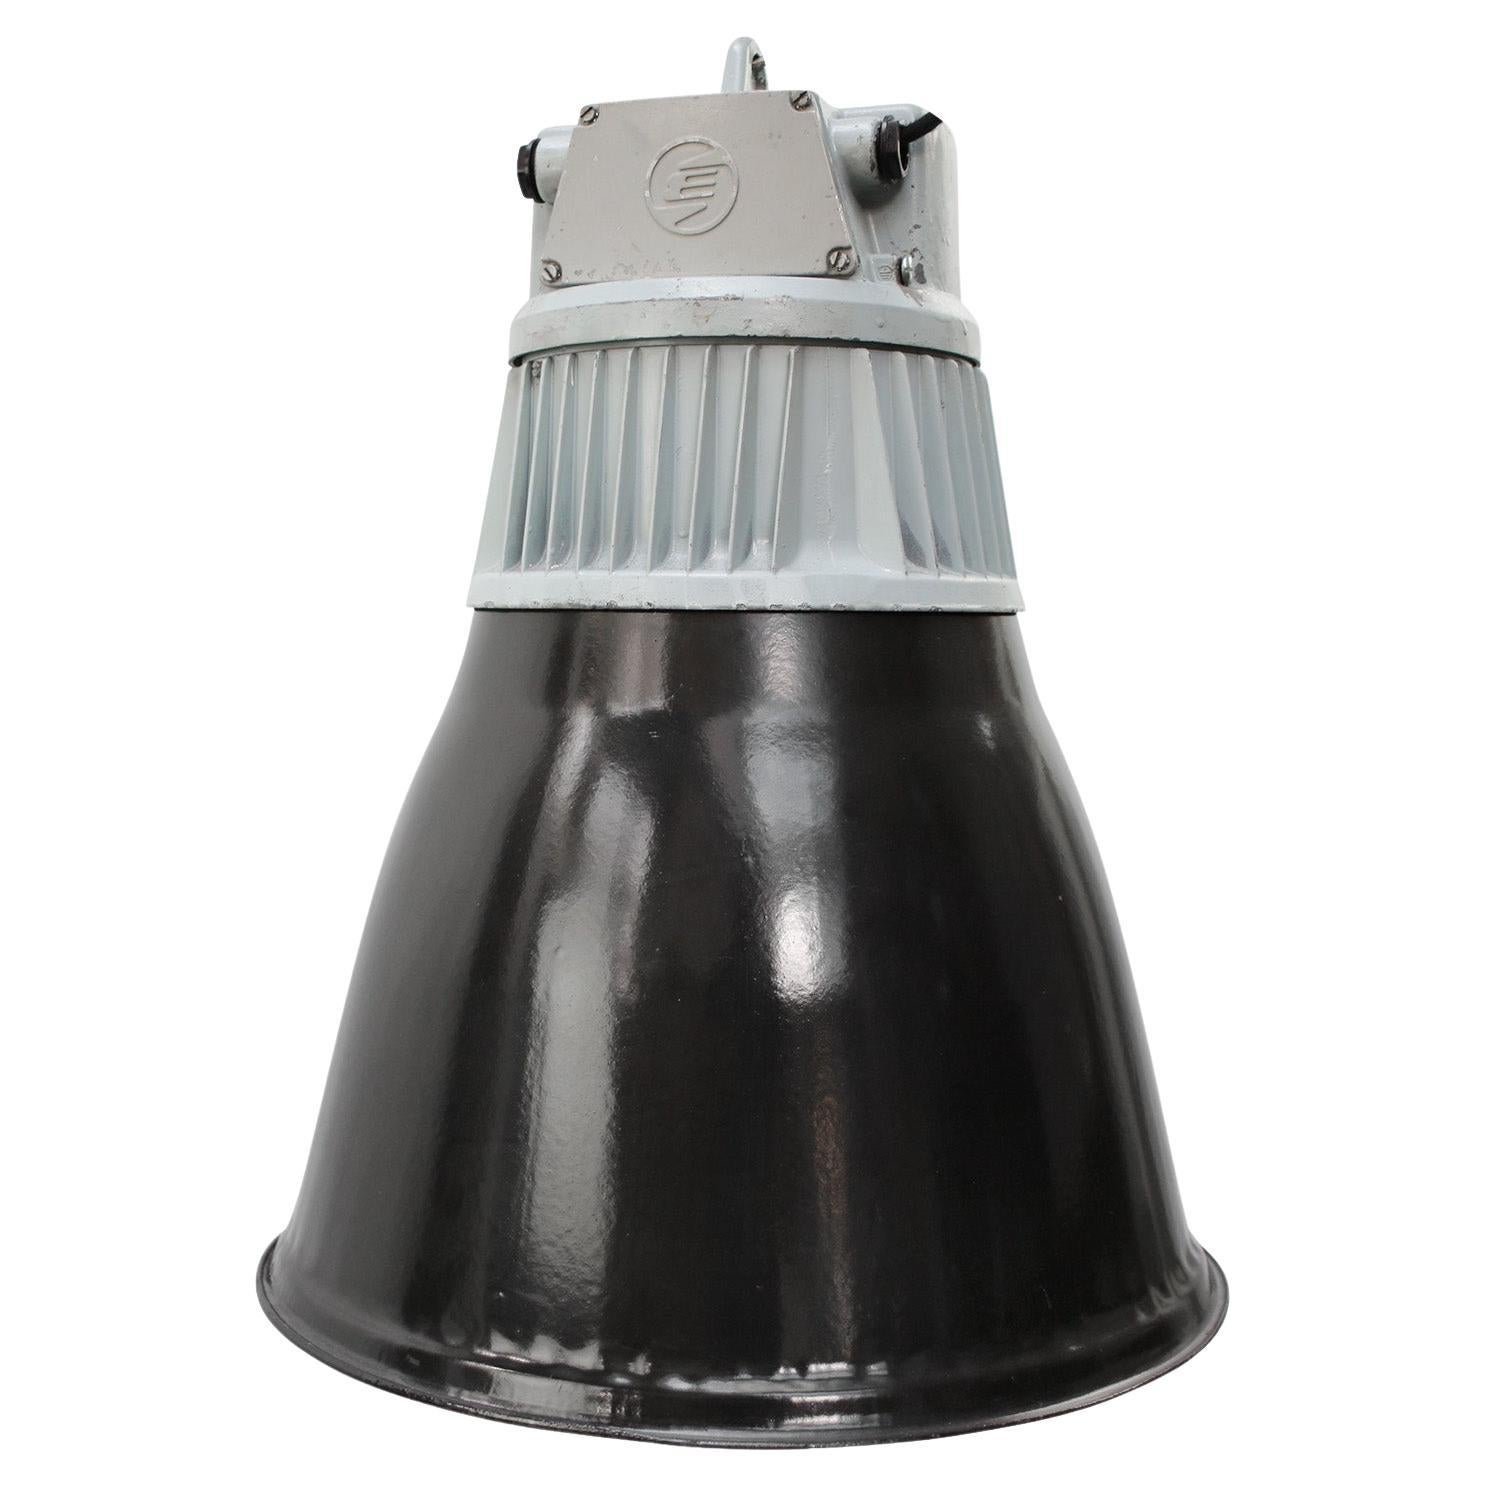 Black Enamel Vintage Industrial Pendant Lights